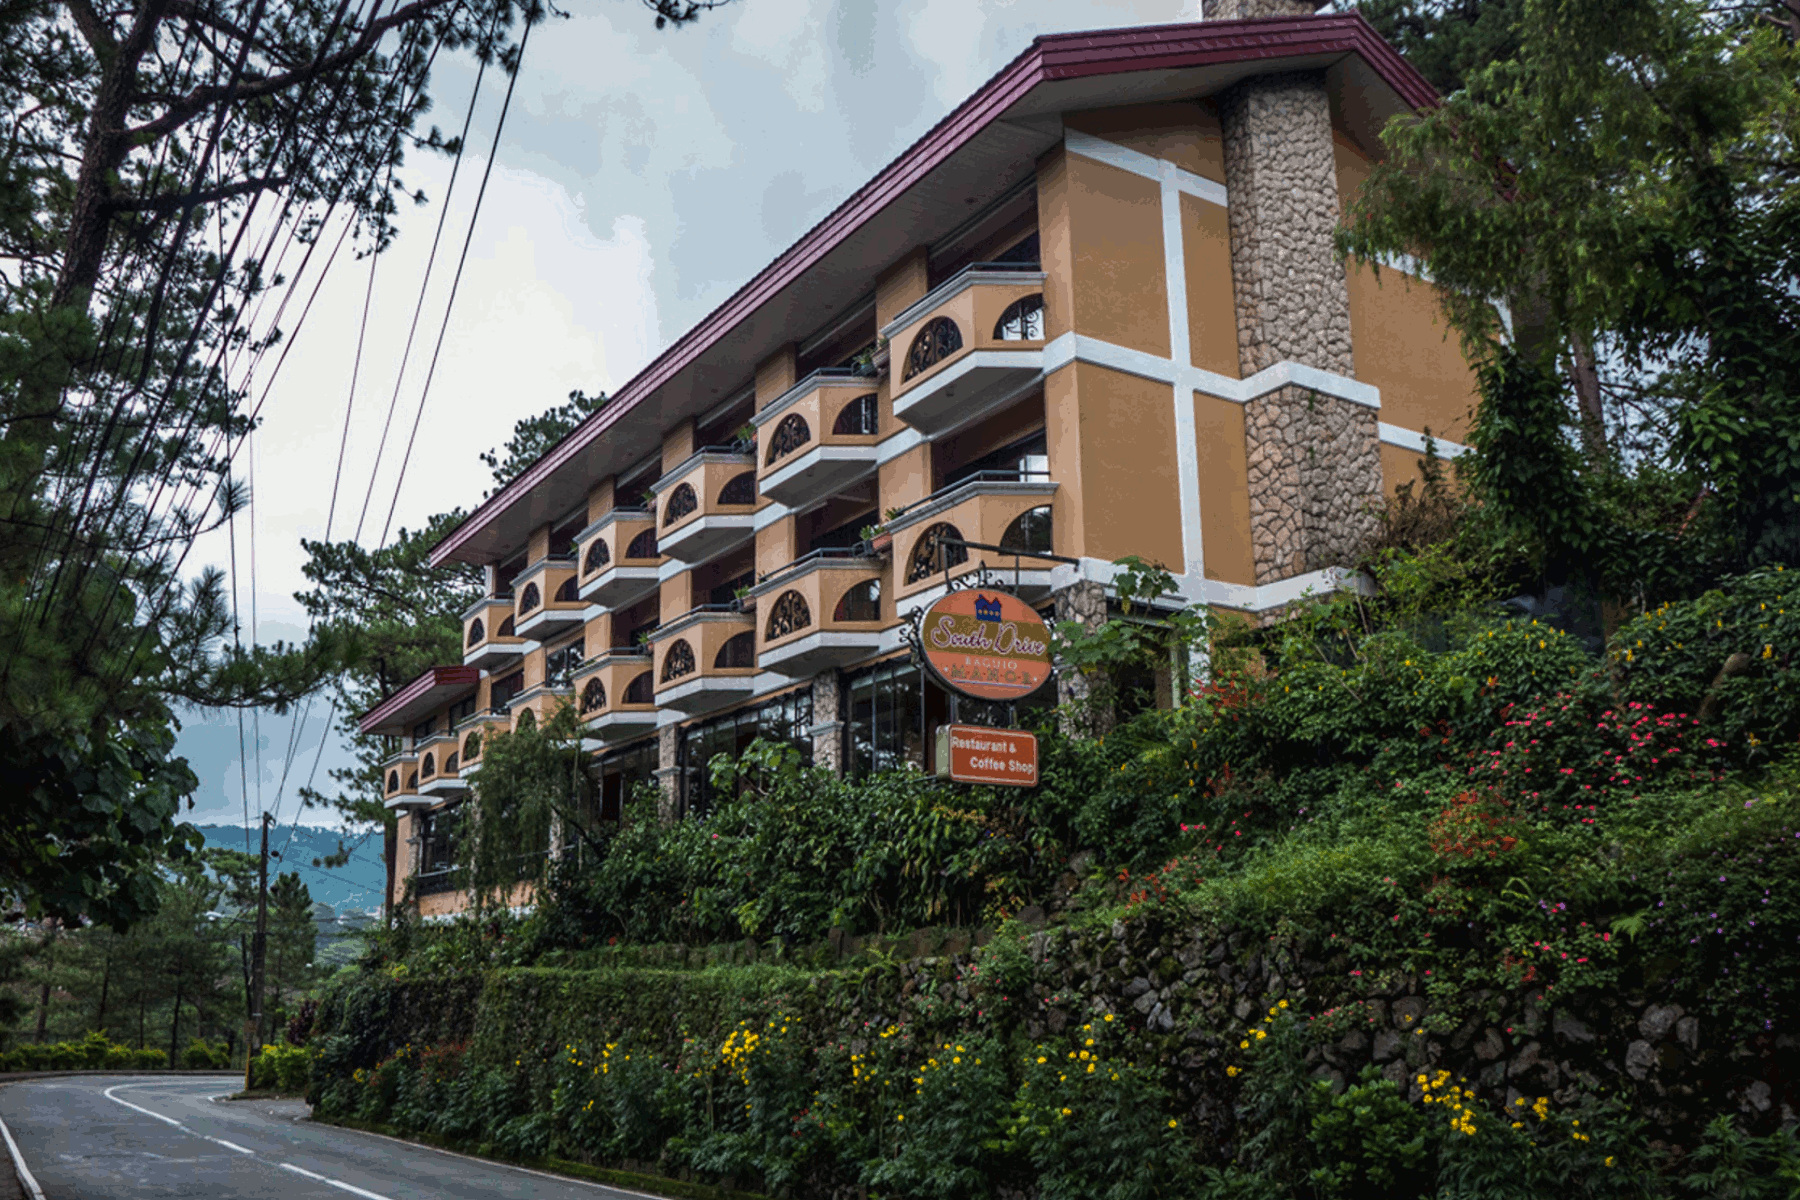 South Drive Baguio Manor slide 3